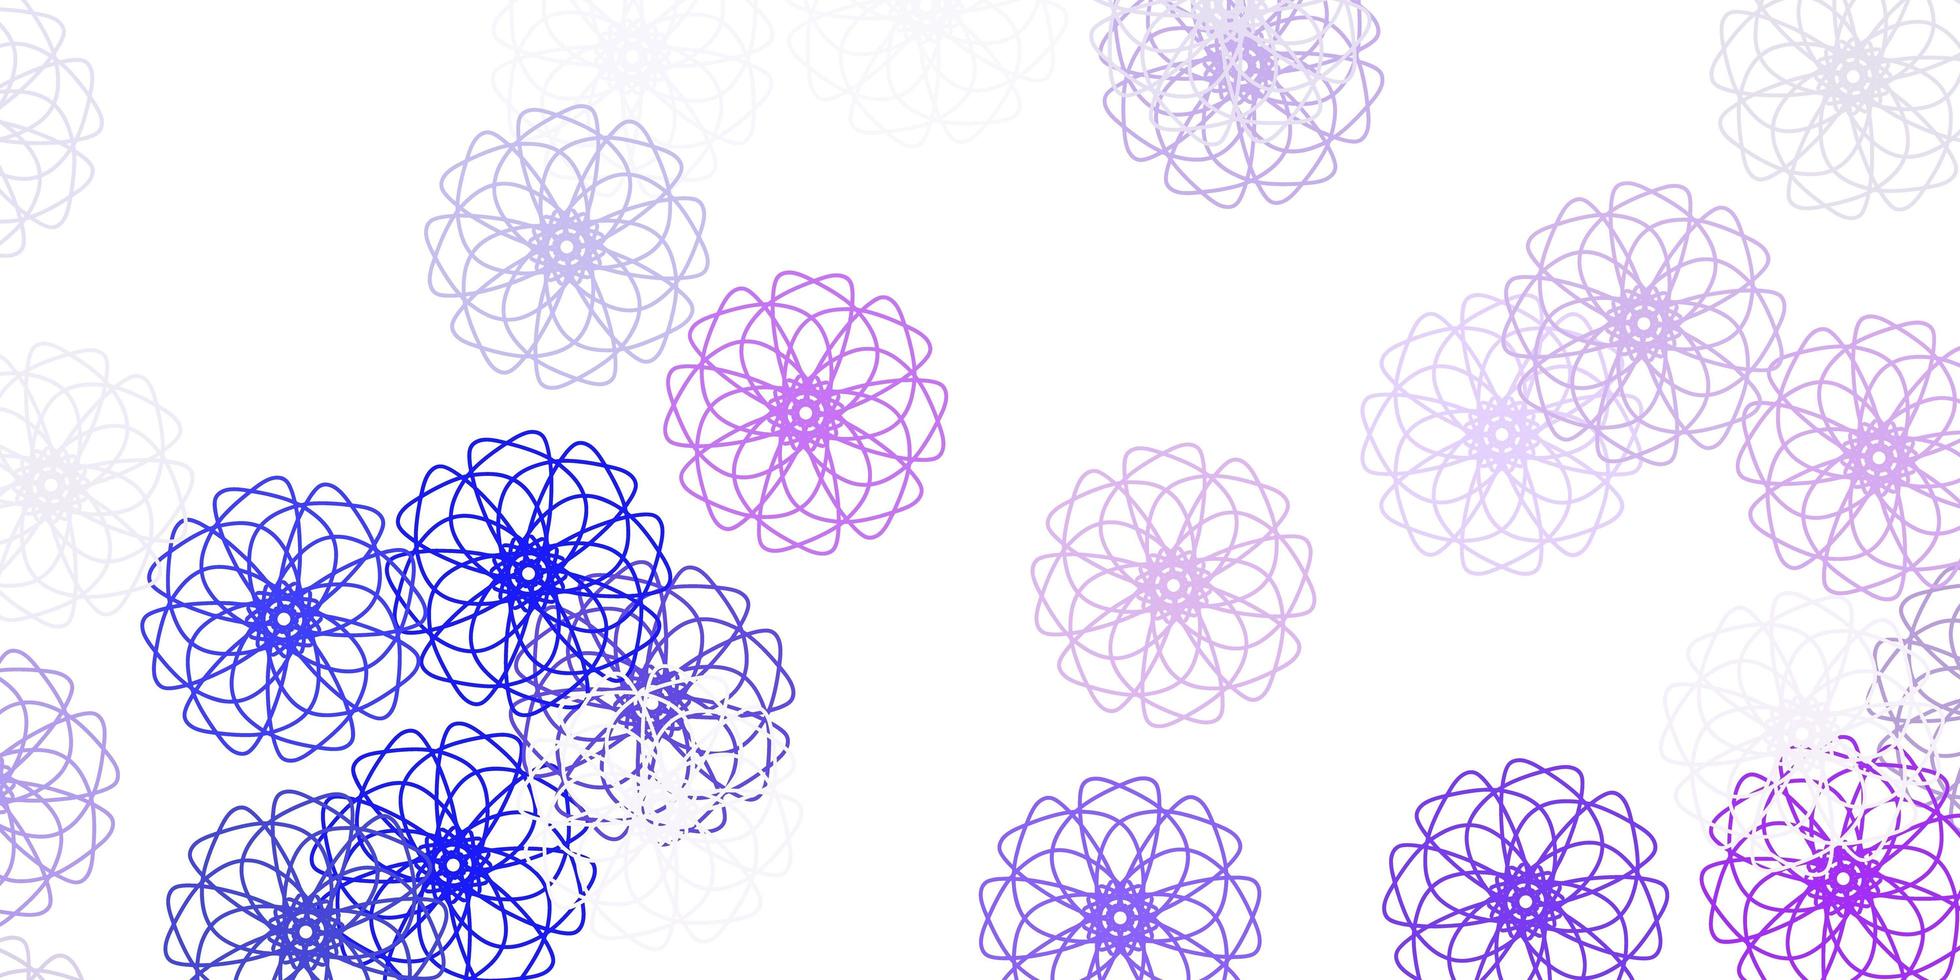 textura de doodle de vetor rosa claro azul com flores.